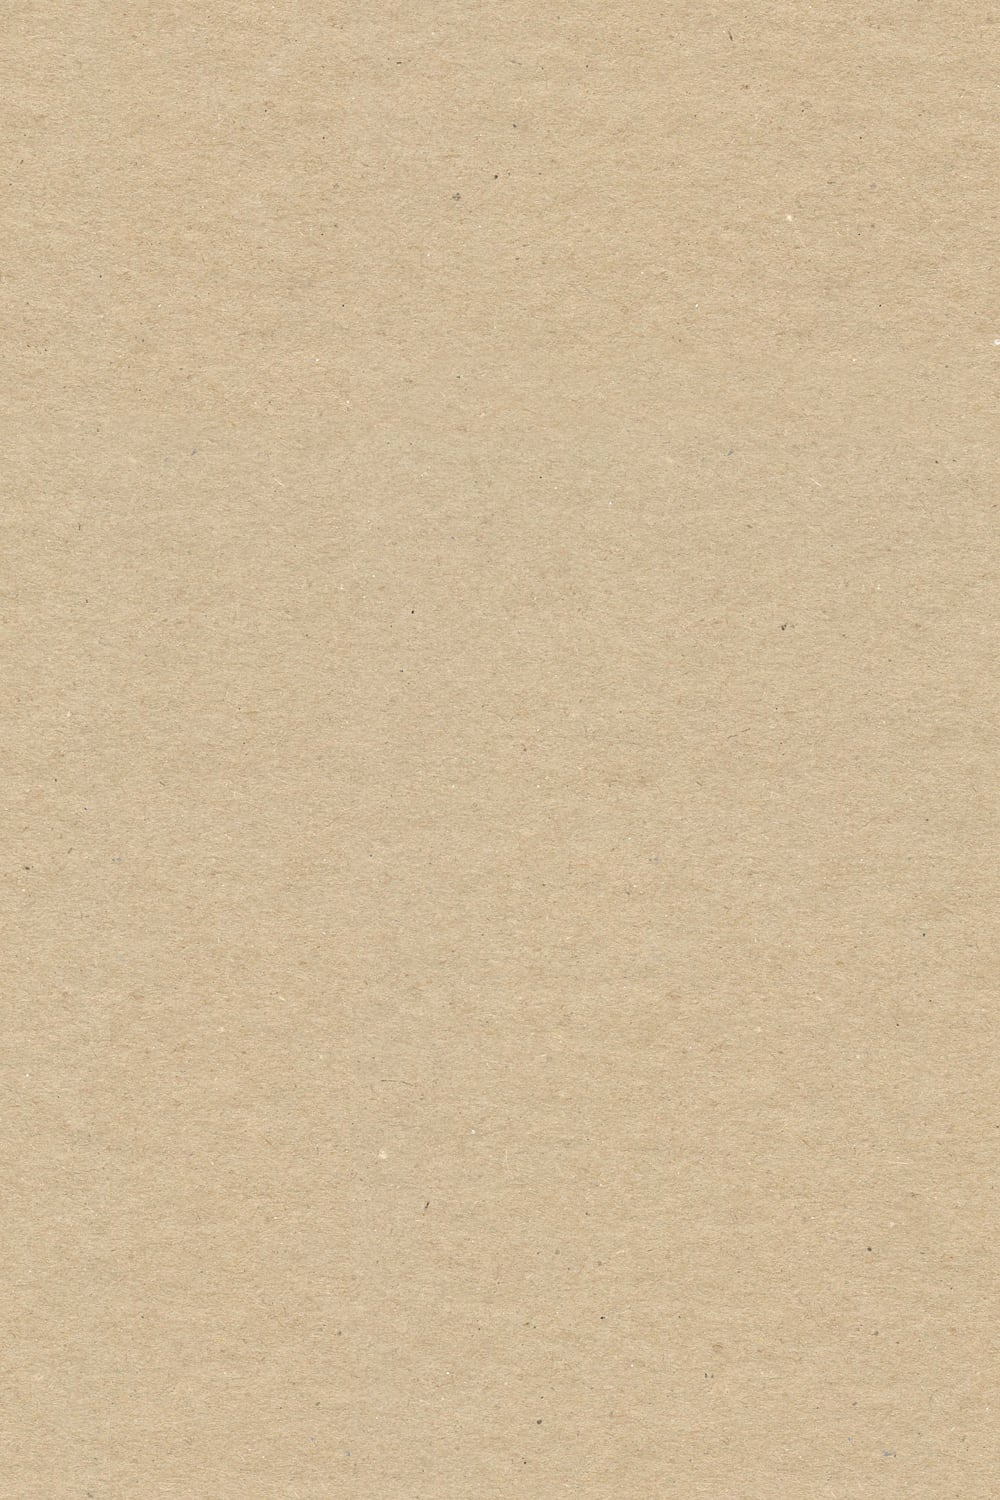 Brown envelope paper - close-up